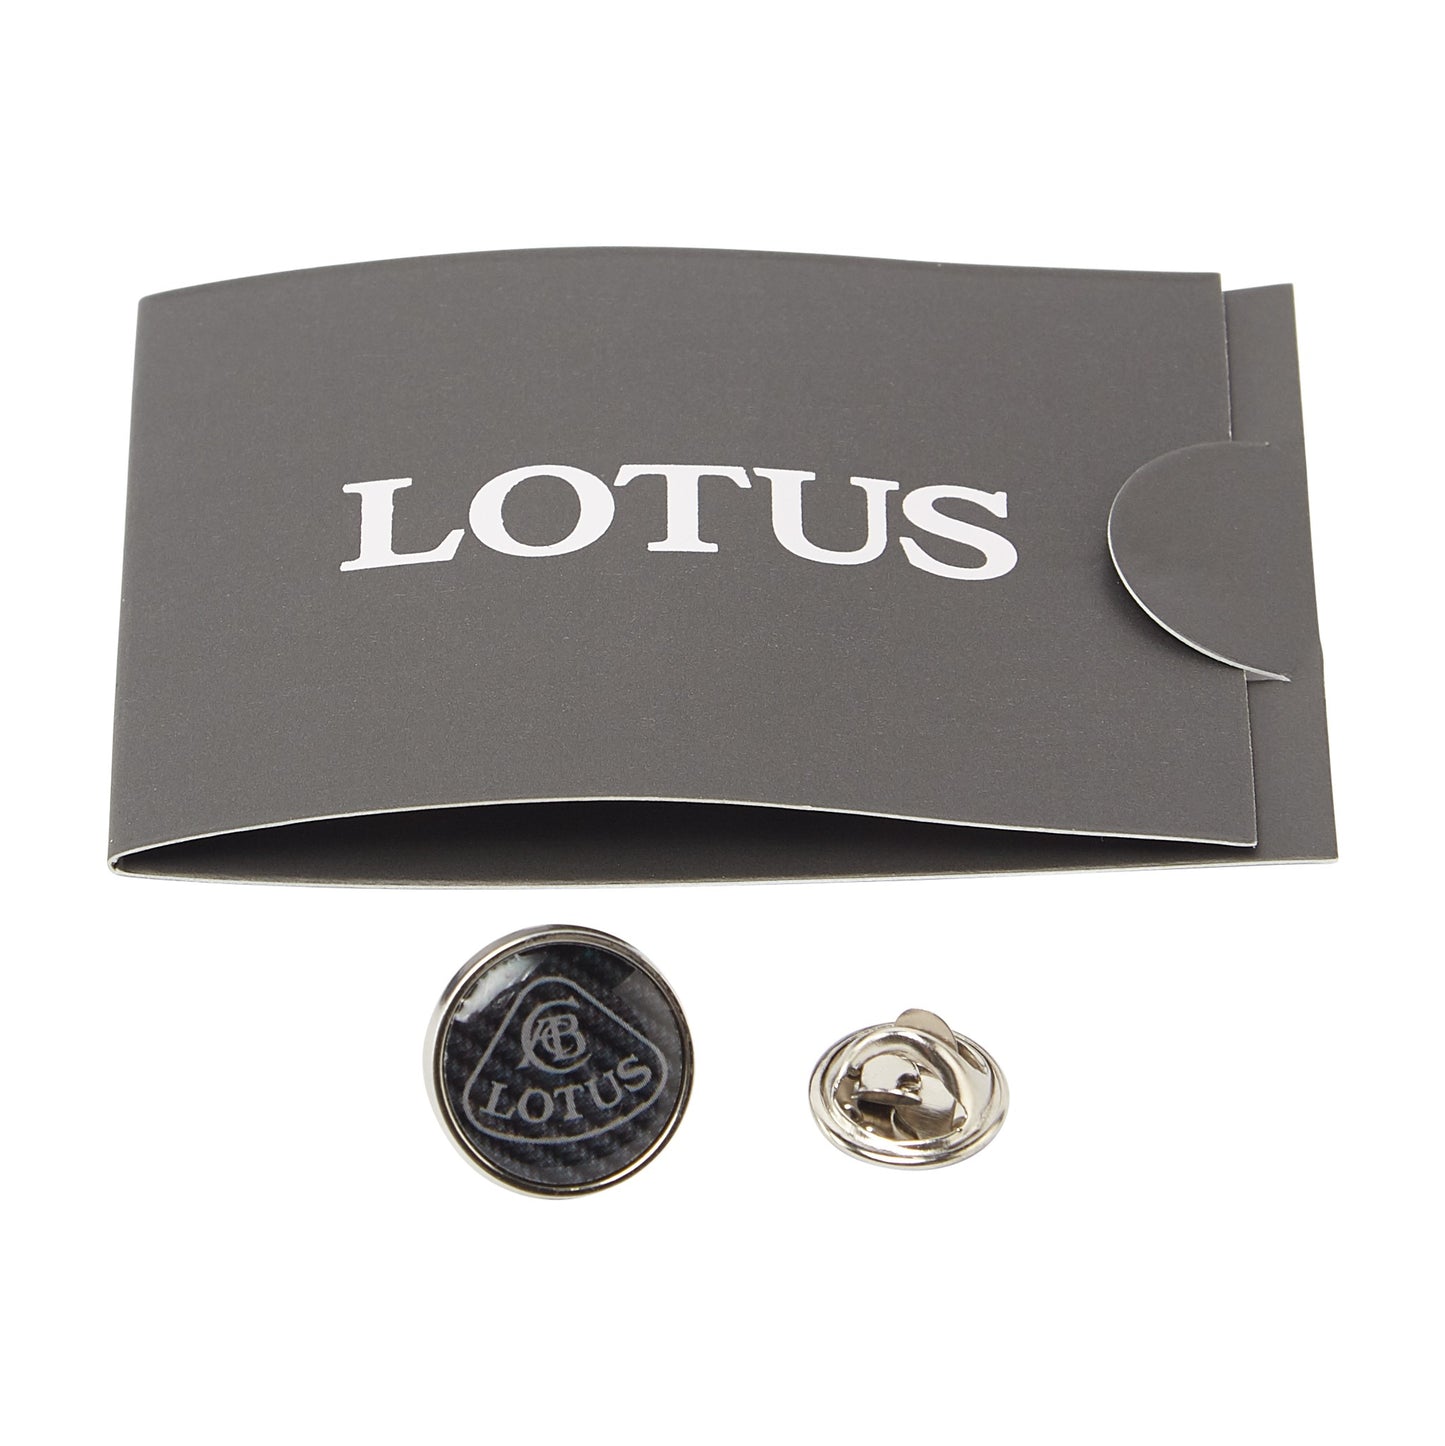 Lotus pin-badge